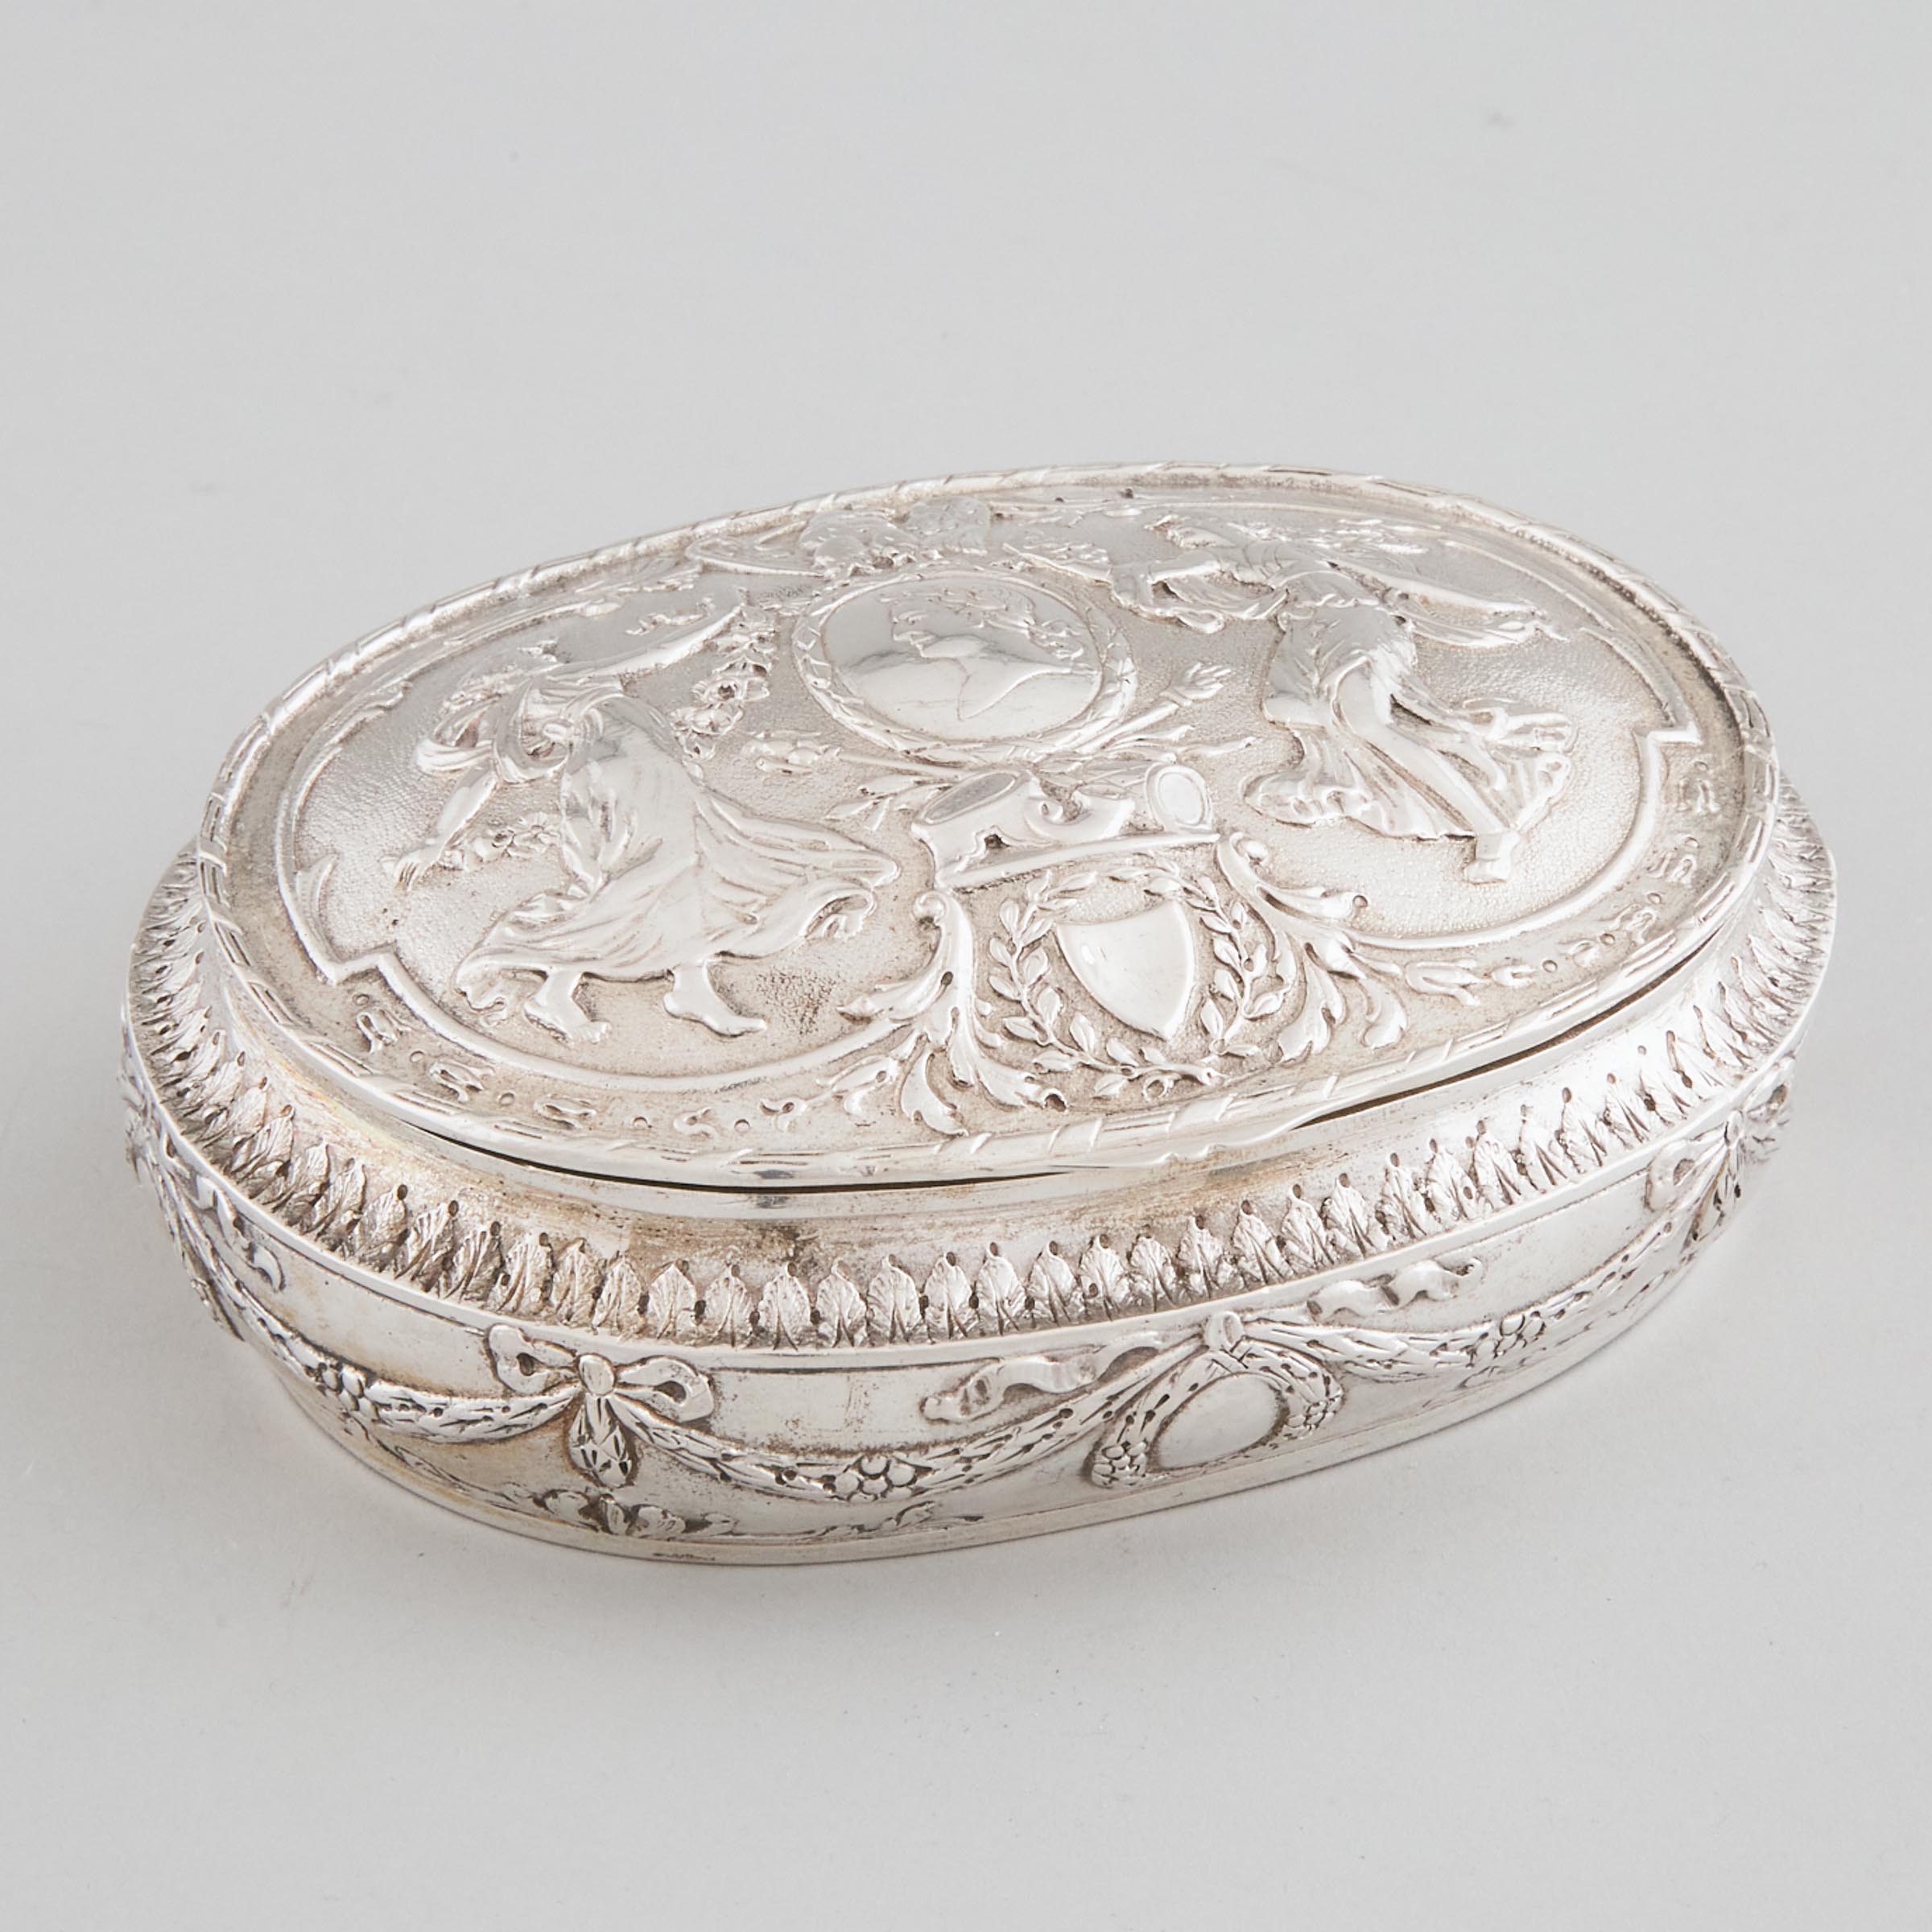 Italian Silver Oval Trinket Box, Demetrio Kremos, Rome, 20th century